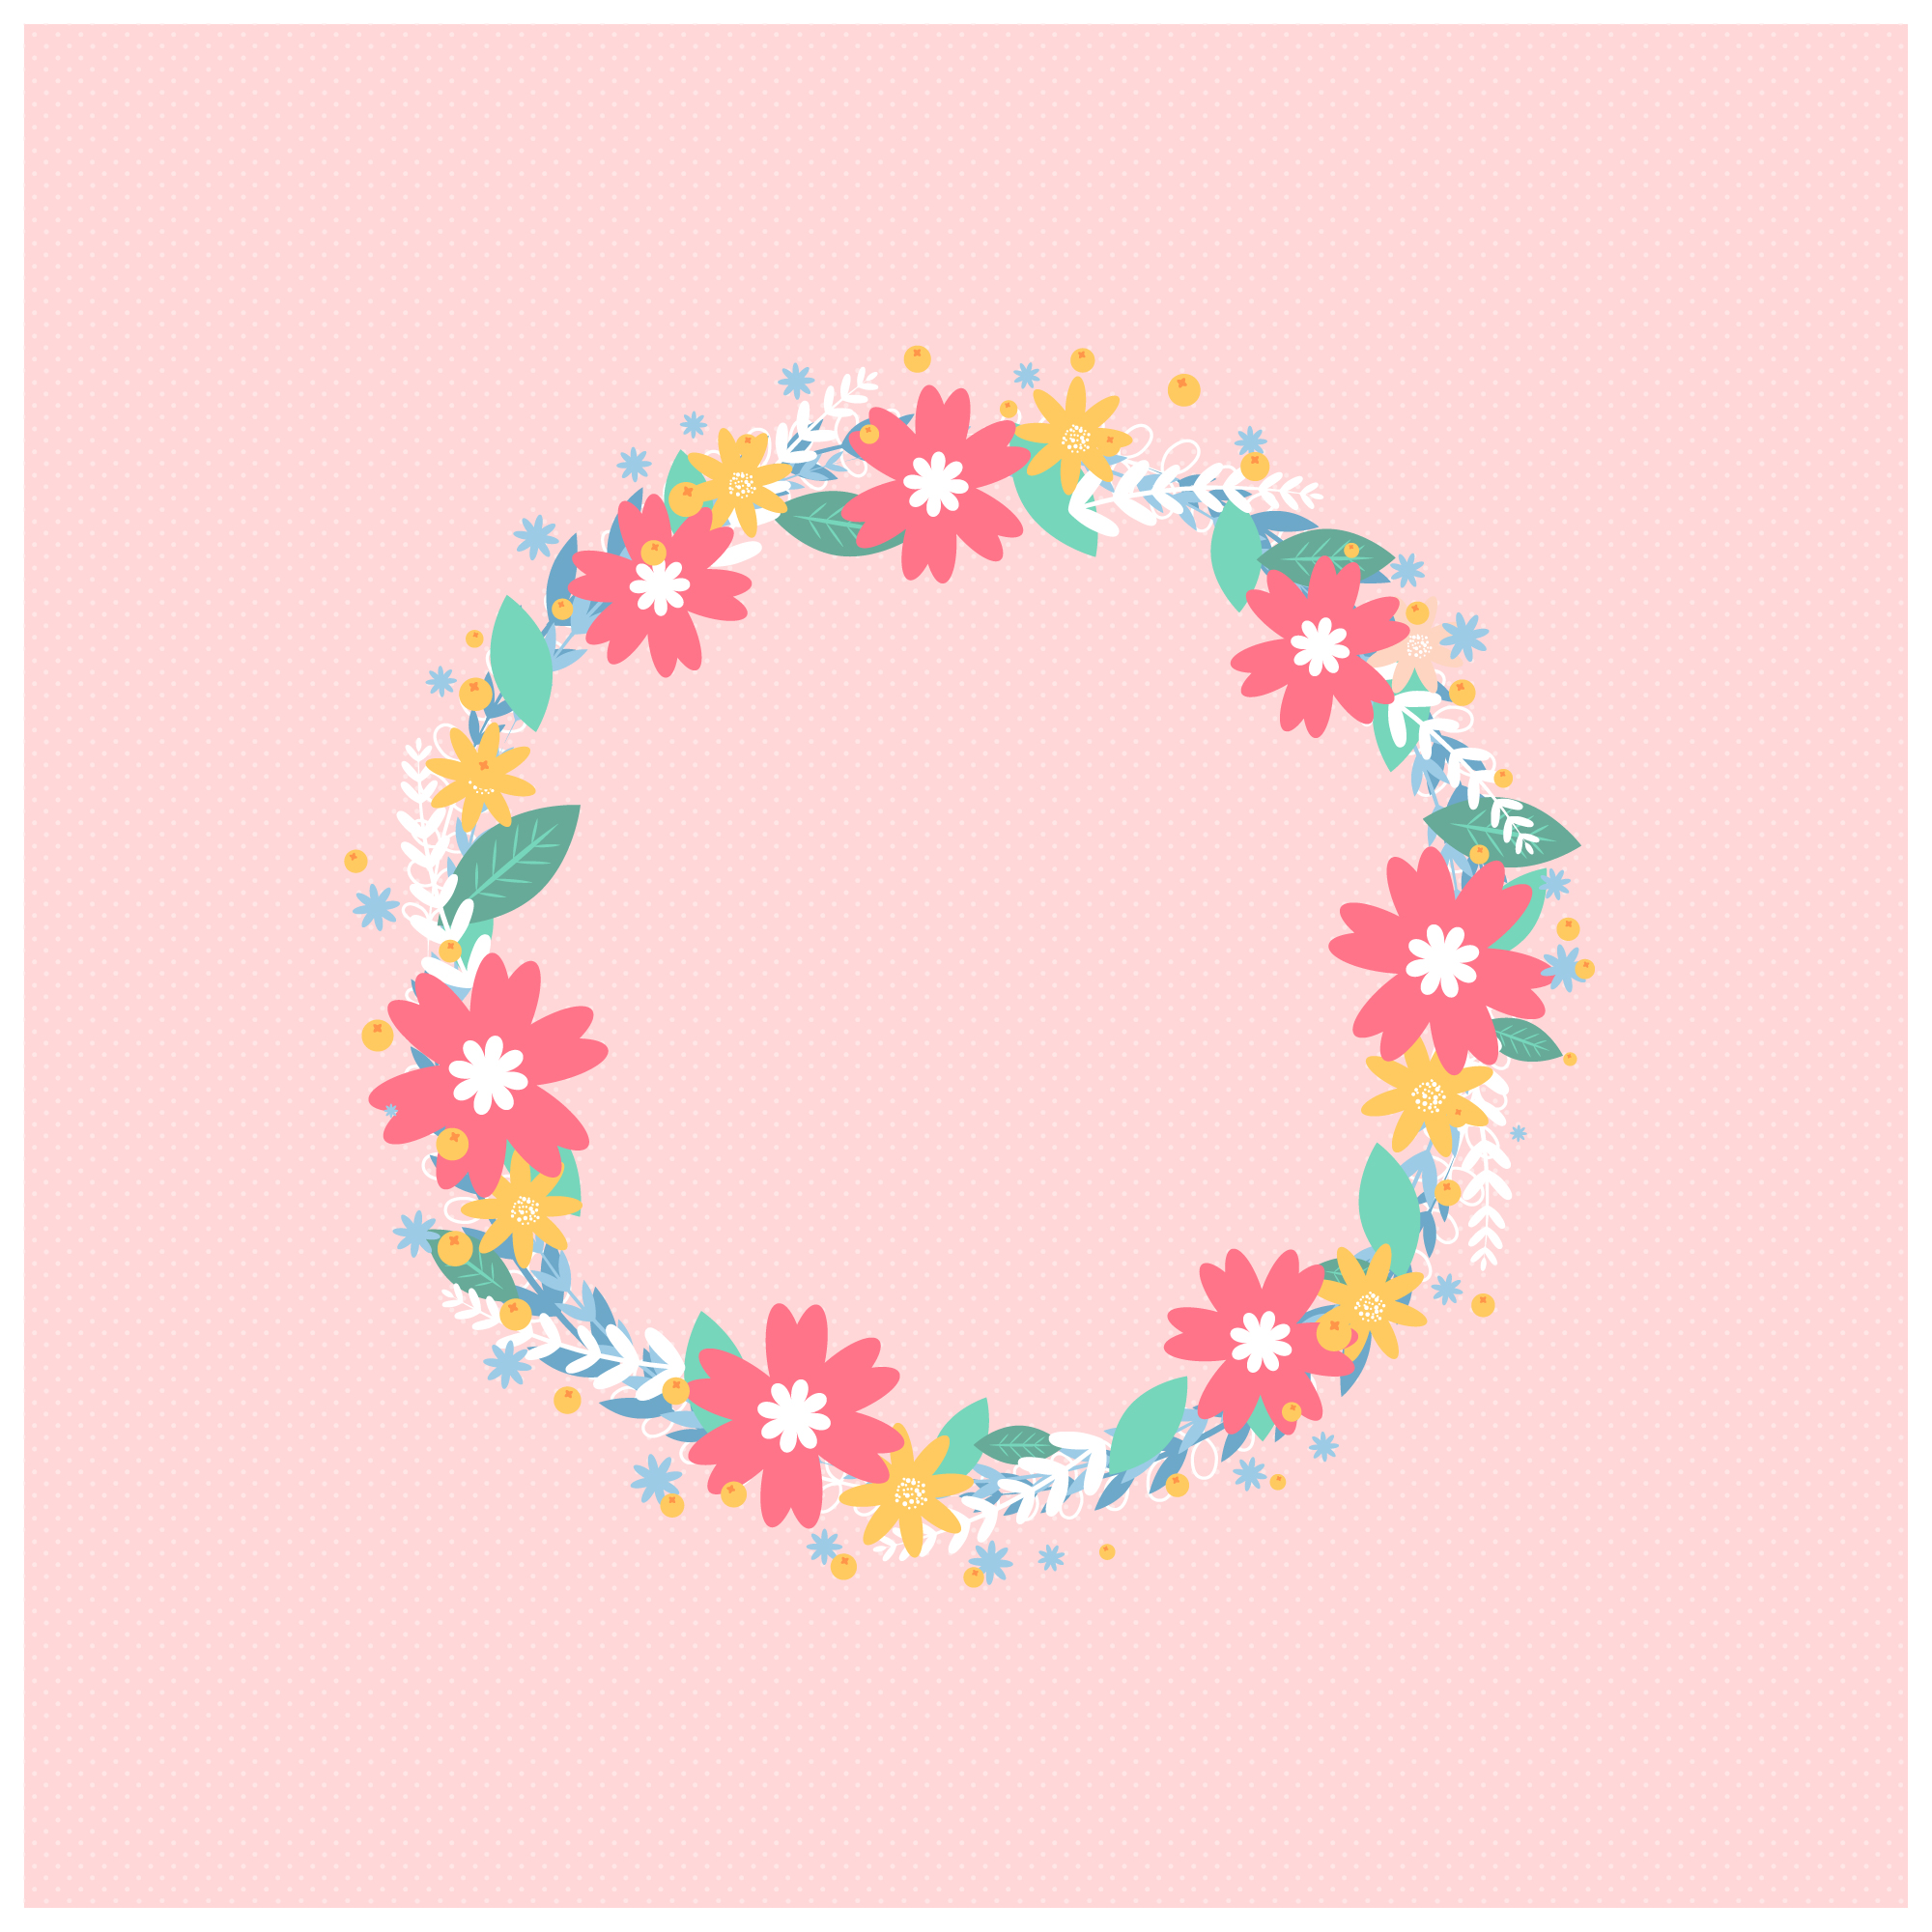 Festive card with floral wreath